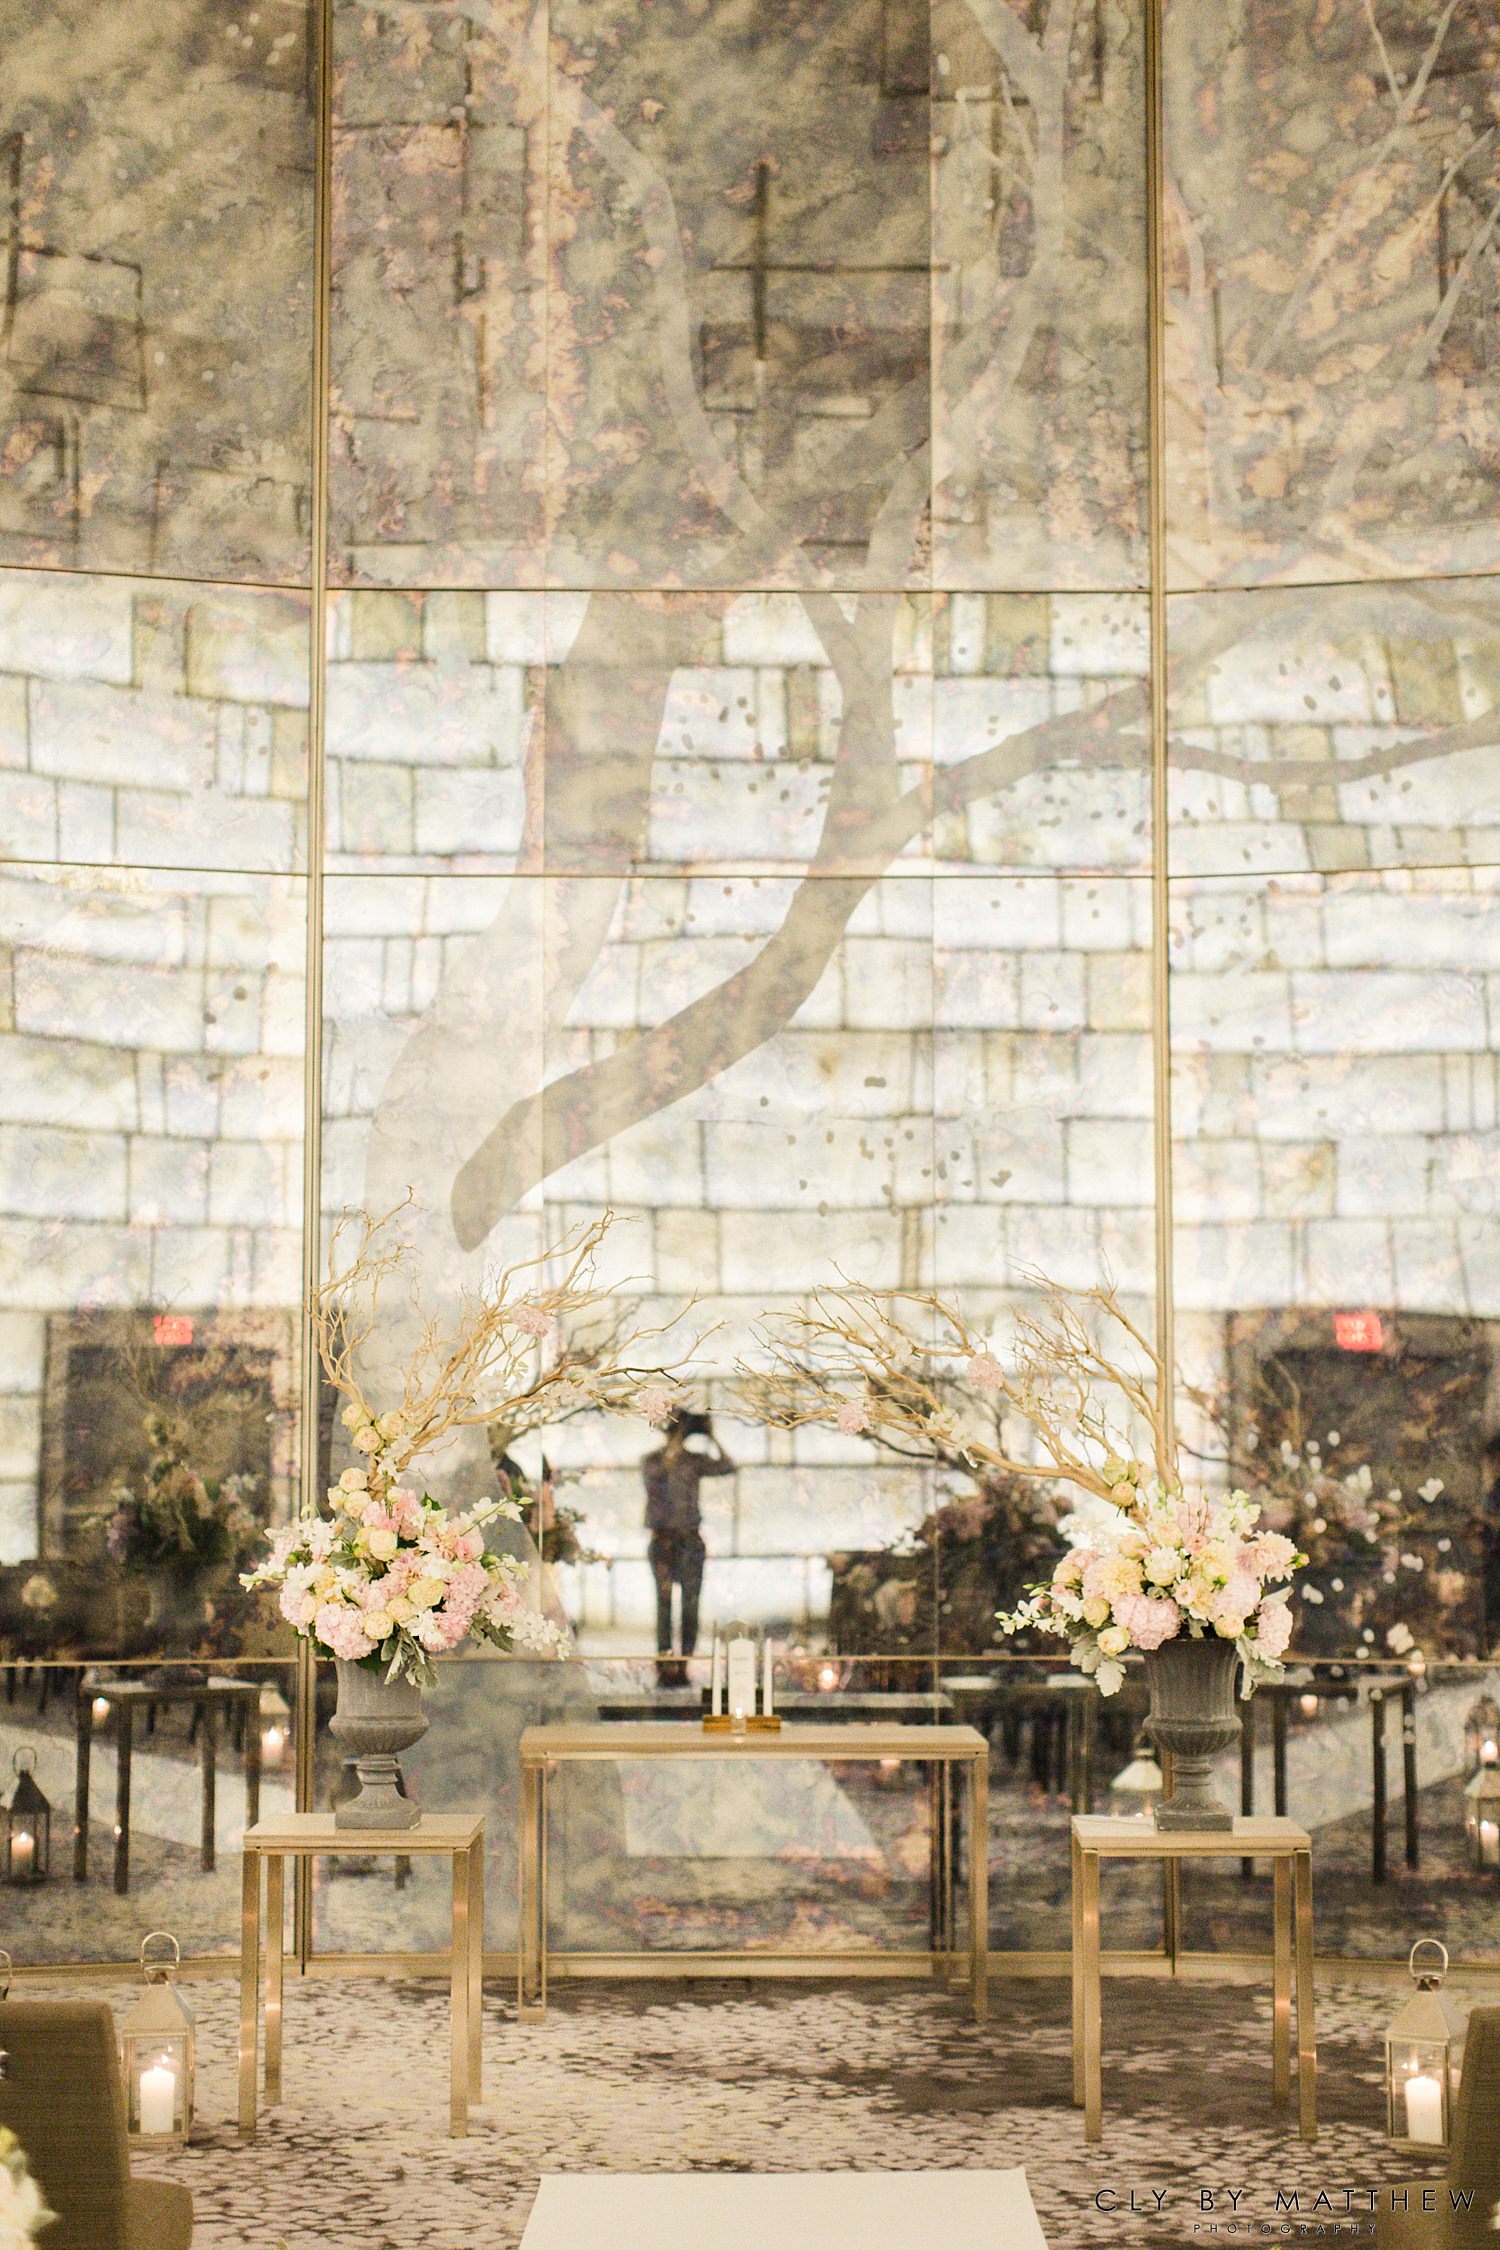 Indoor wedding ceremony at the Park Hyatt Hotel in NYC via Jubilee Events